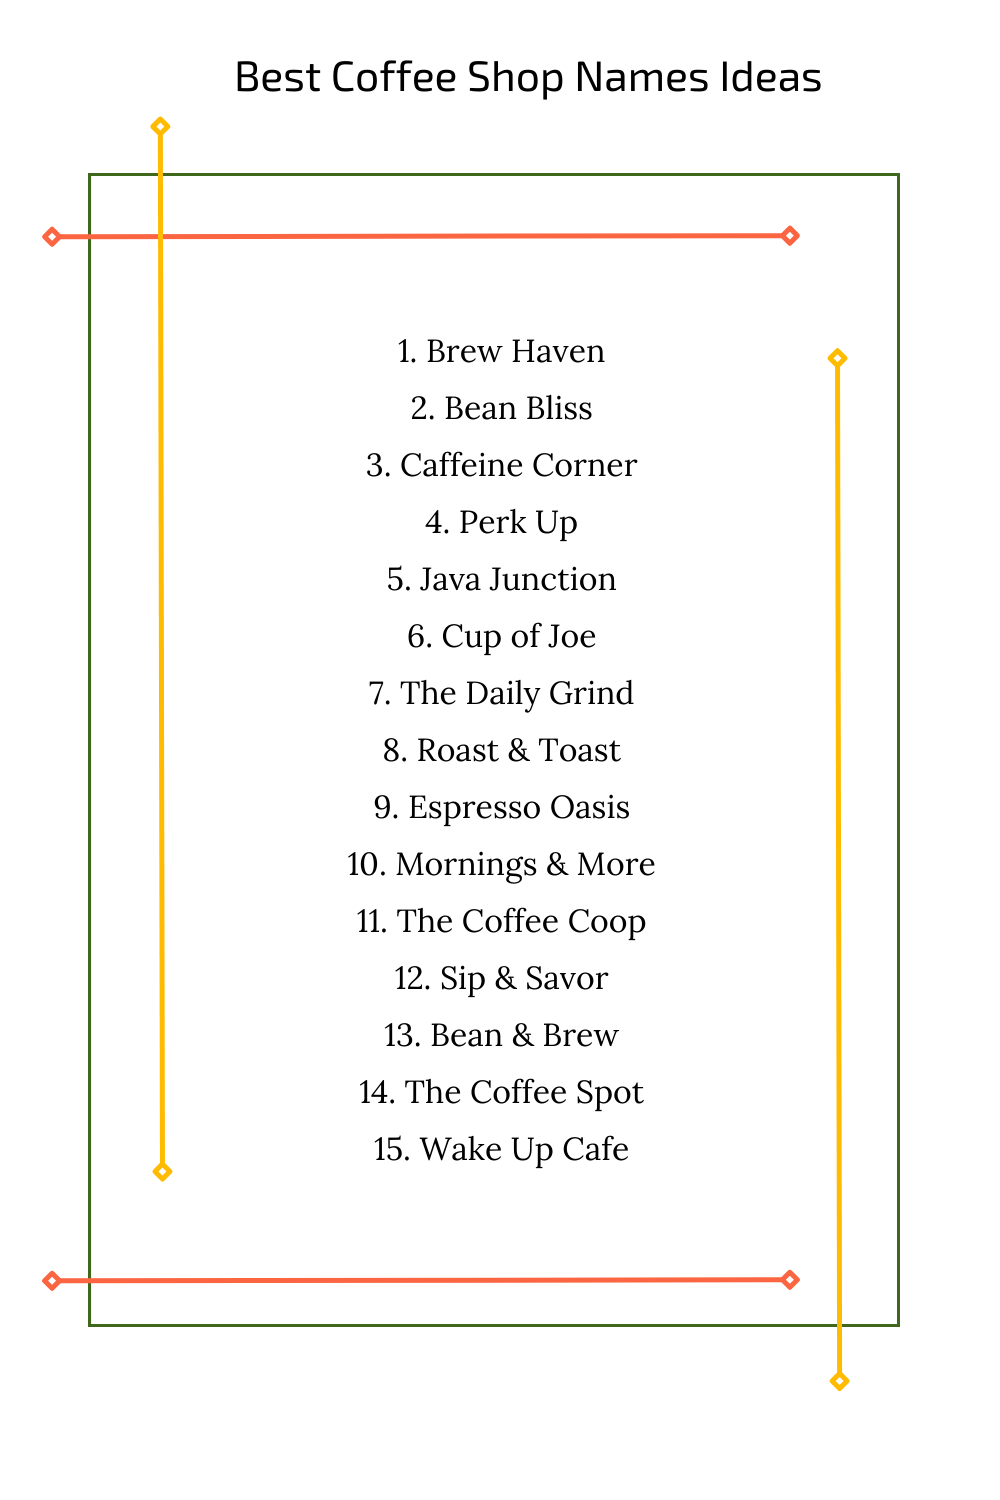 Best Coffee Shop Names Ideas